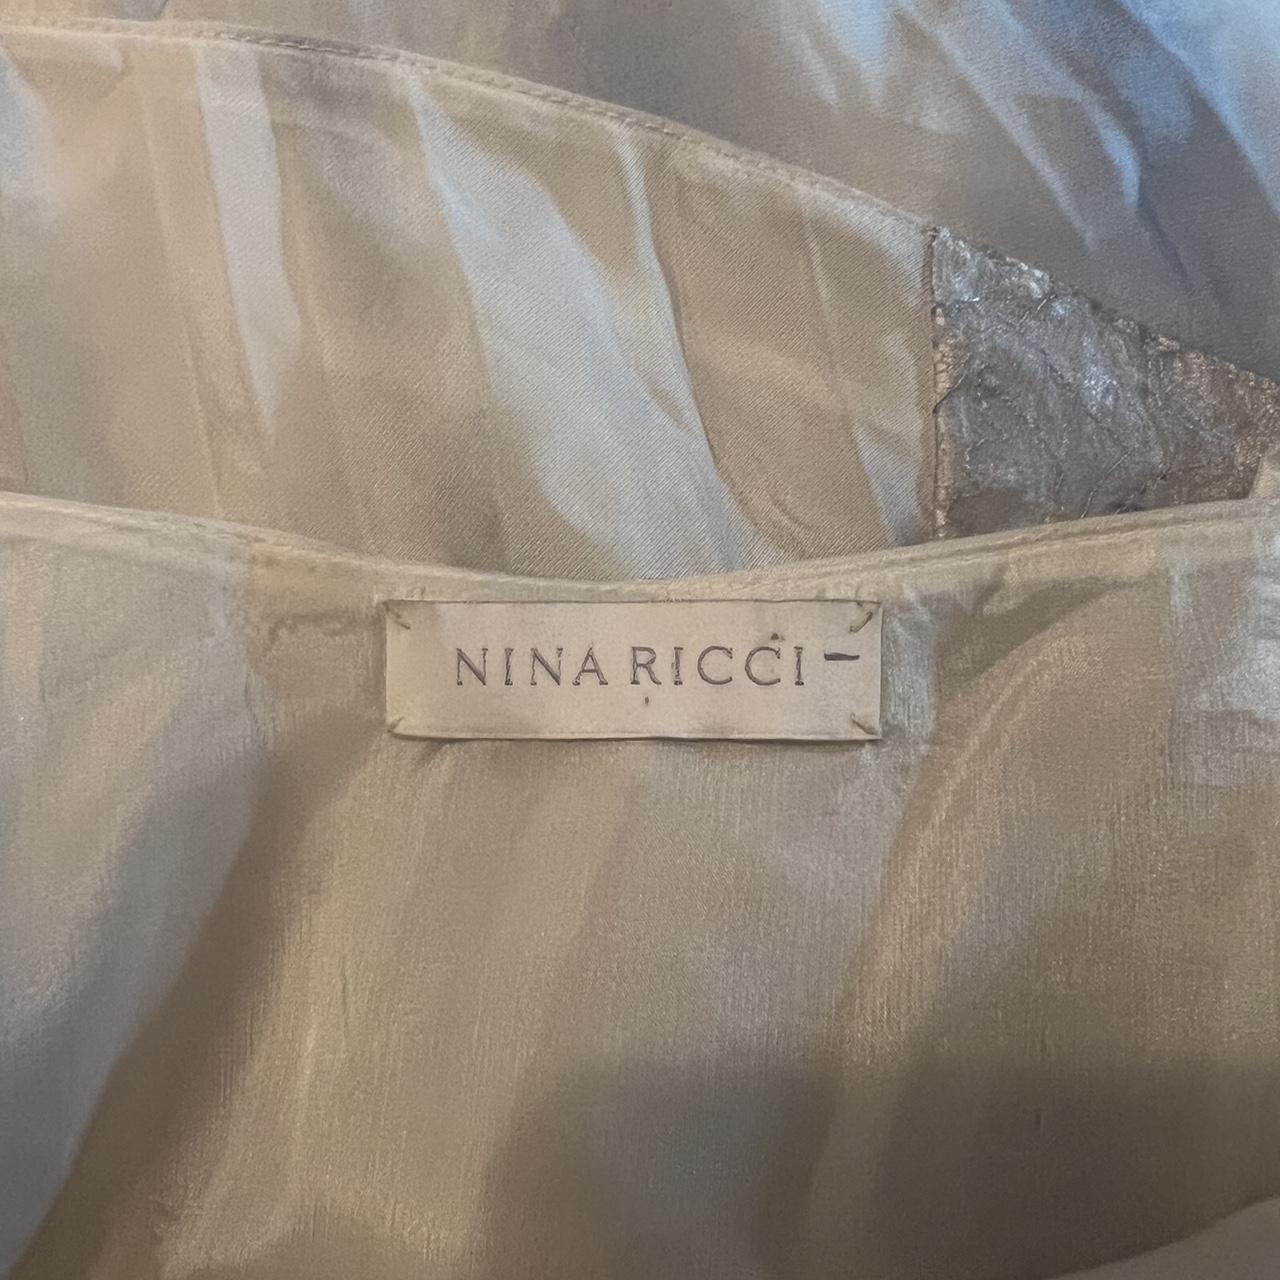 Product Image 4 - Nina Ricci vintage cami top

Super